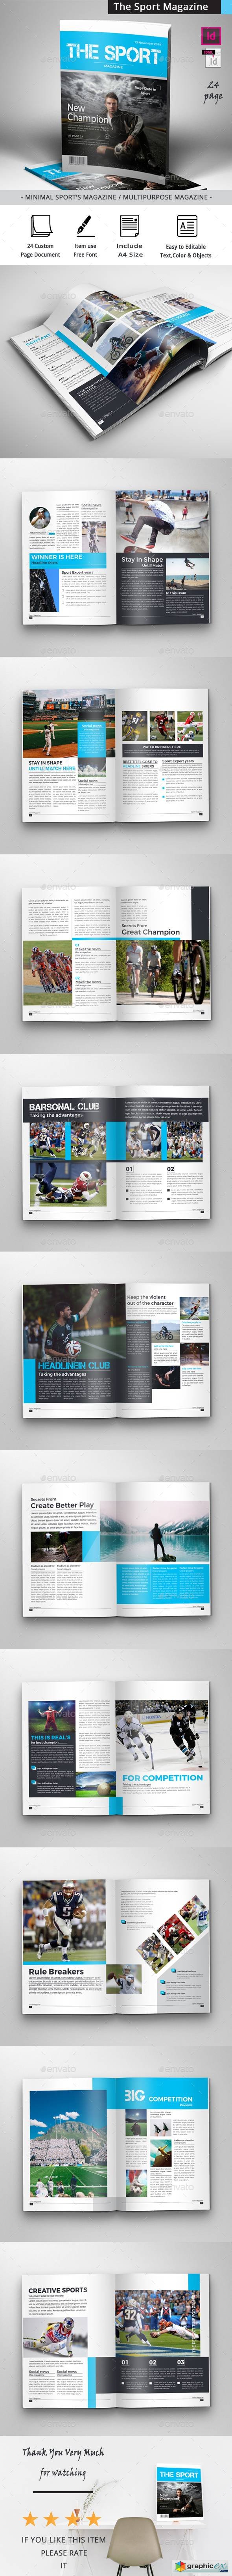 The Sport Magazine